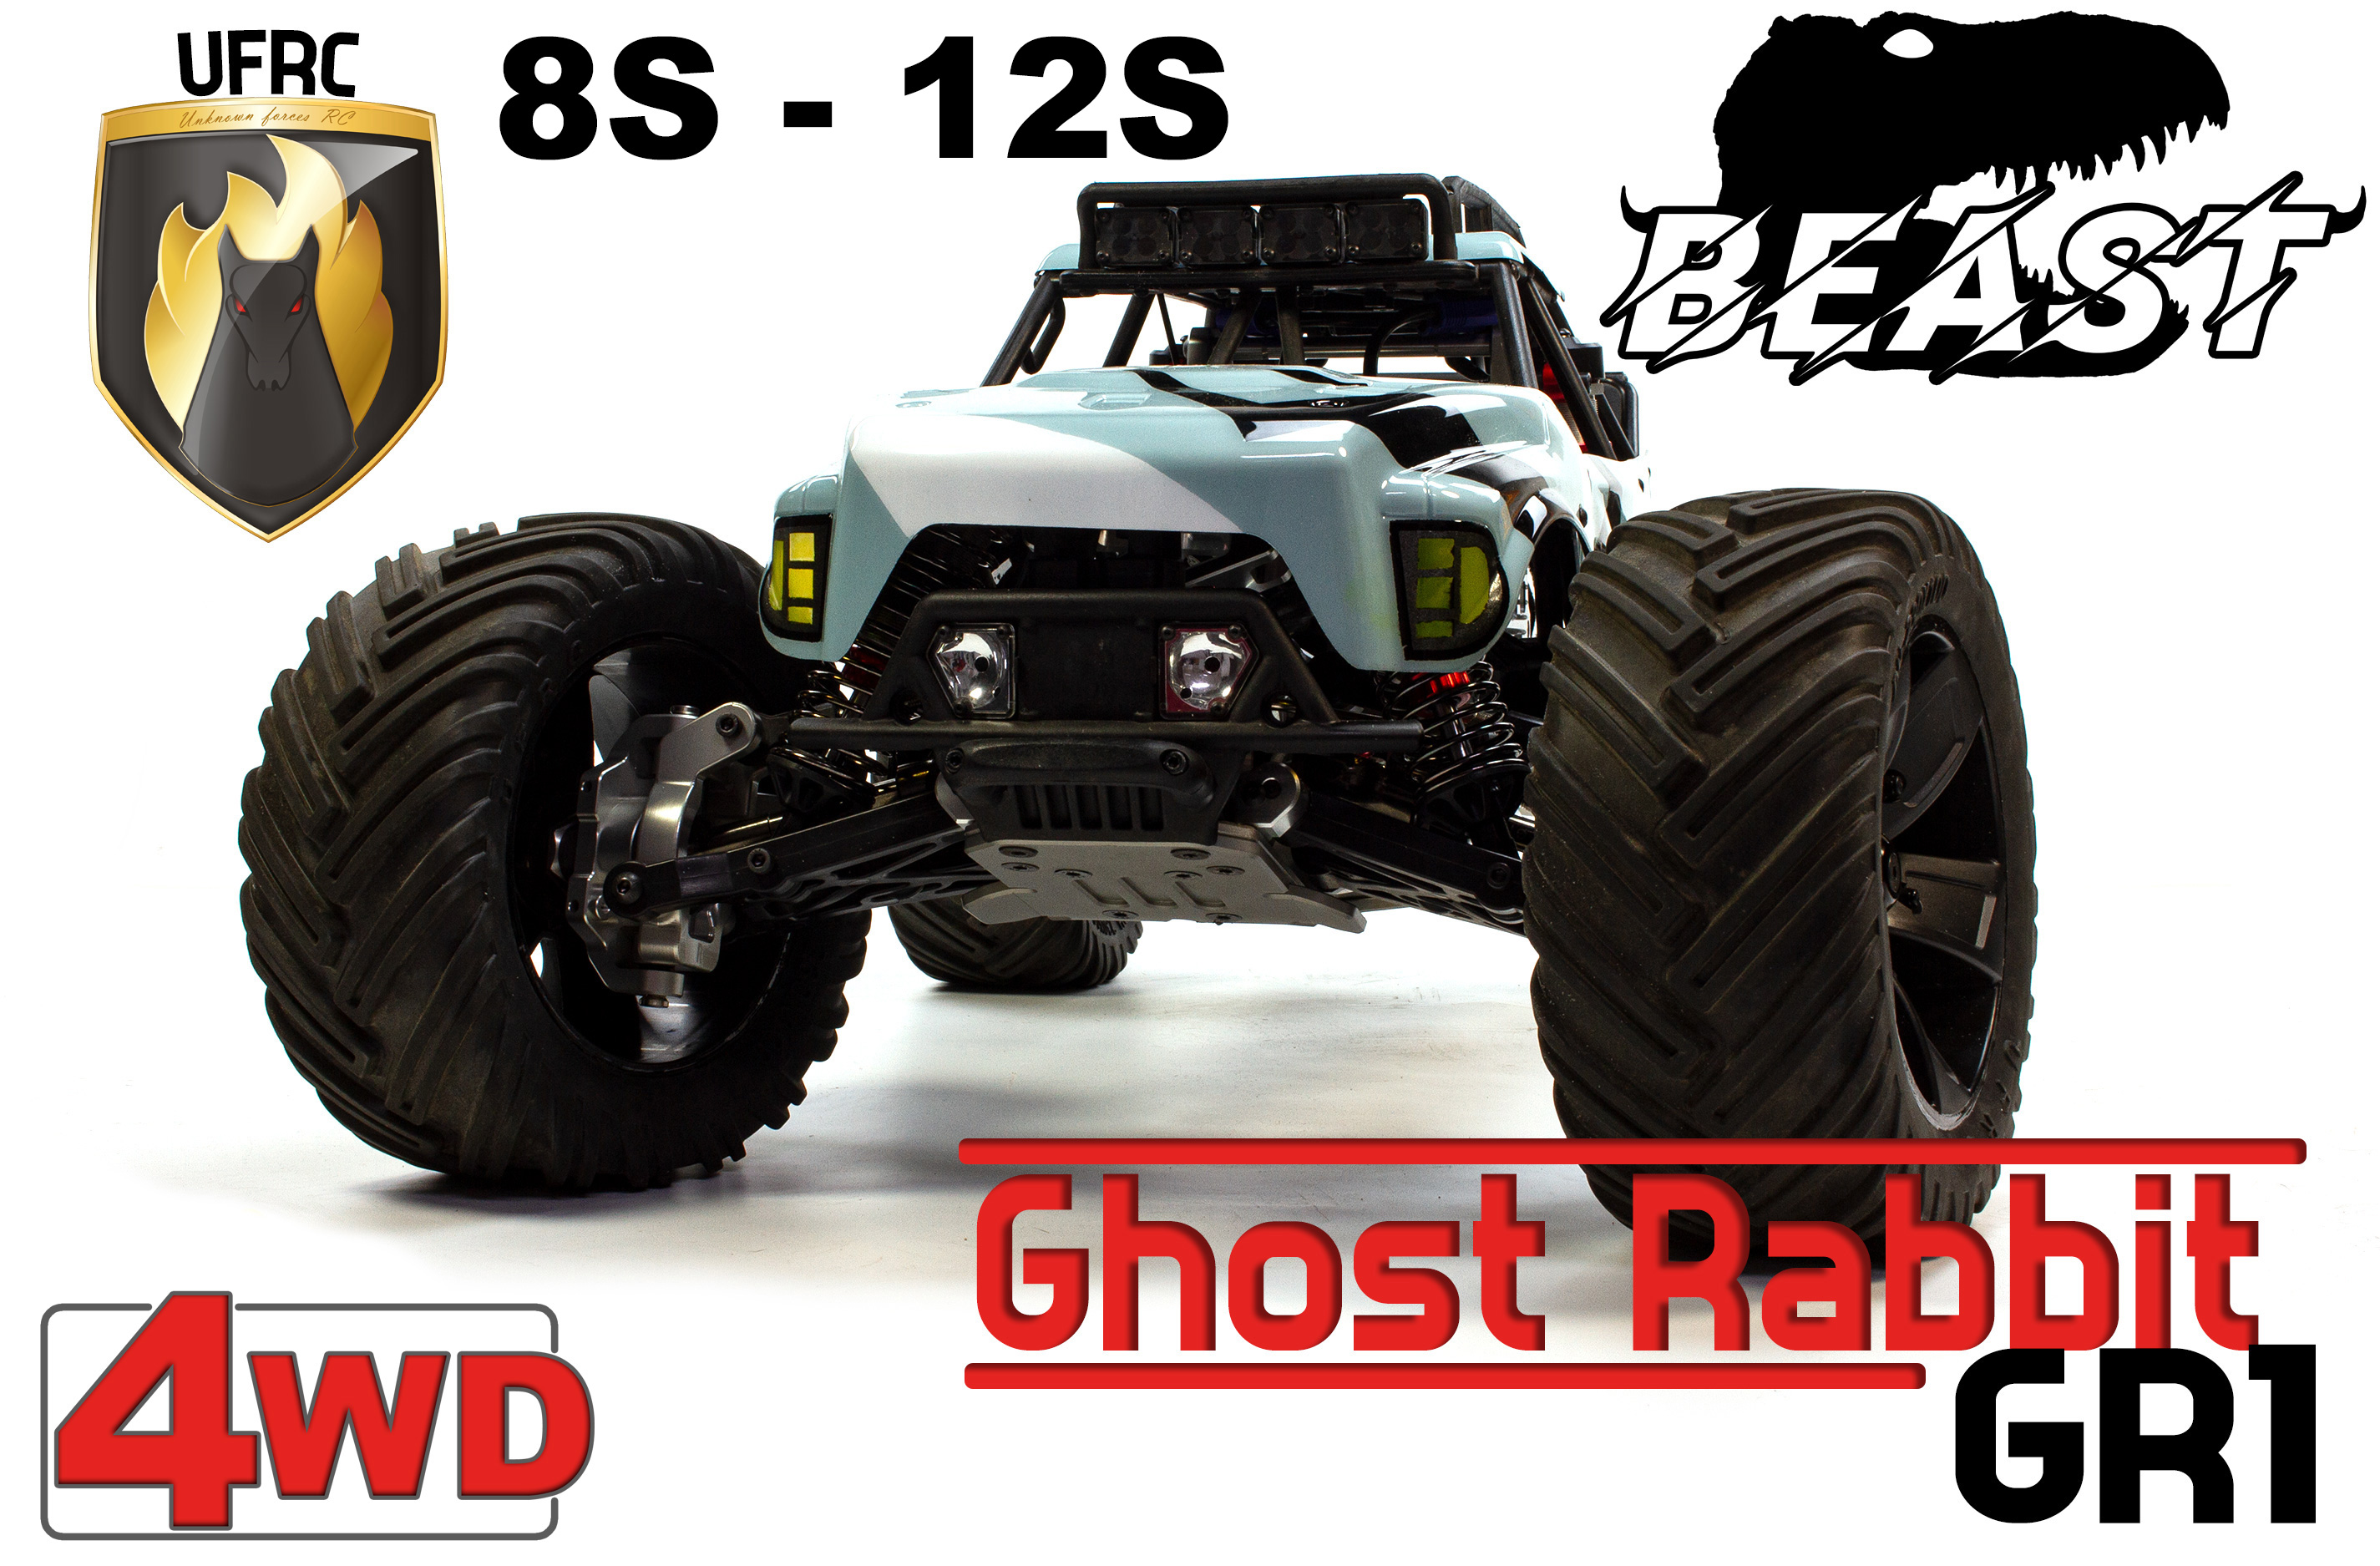 UFRC Ghost Rabbit GR1 4WD 1:5 Brushless Buggy